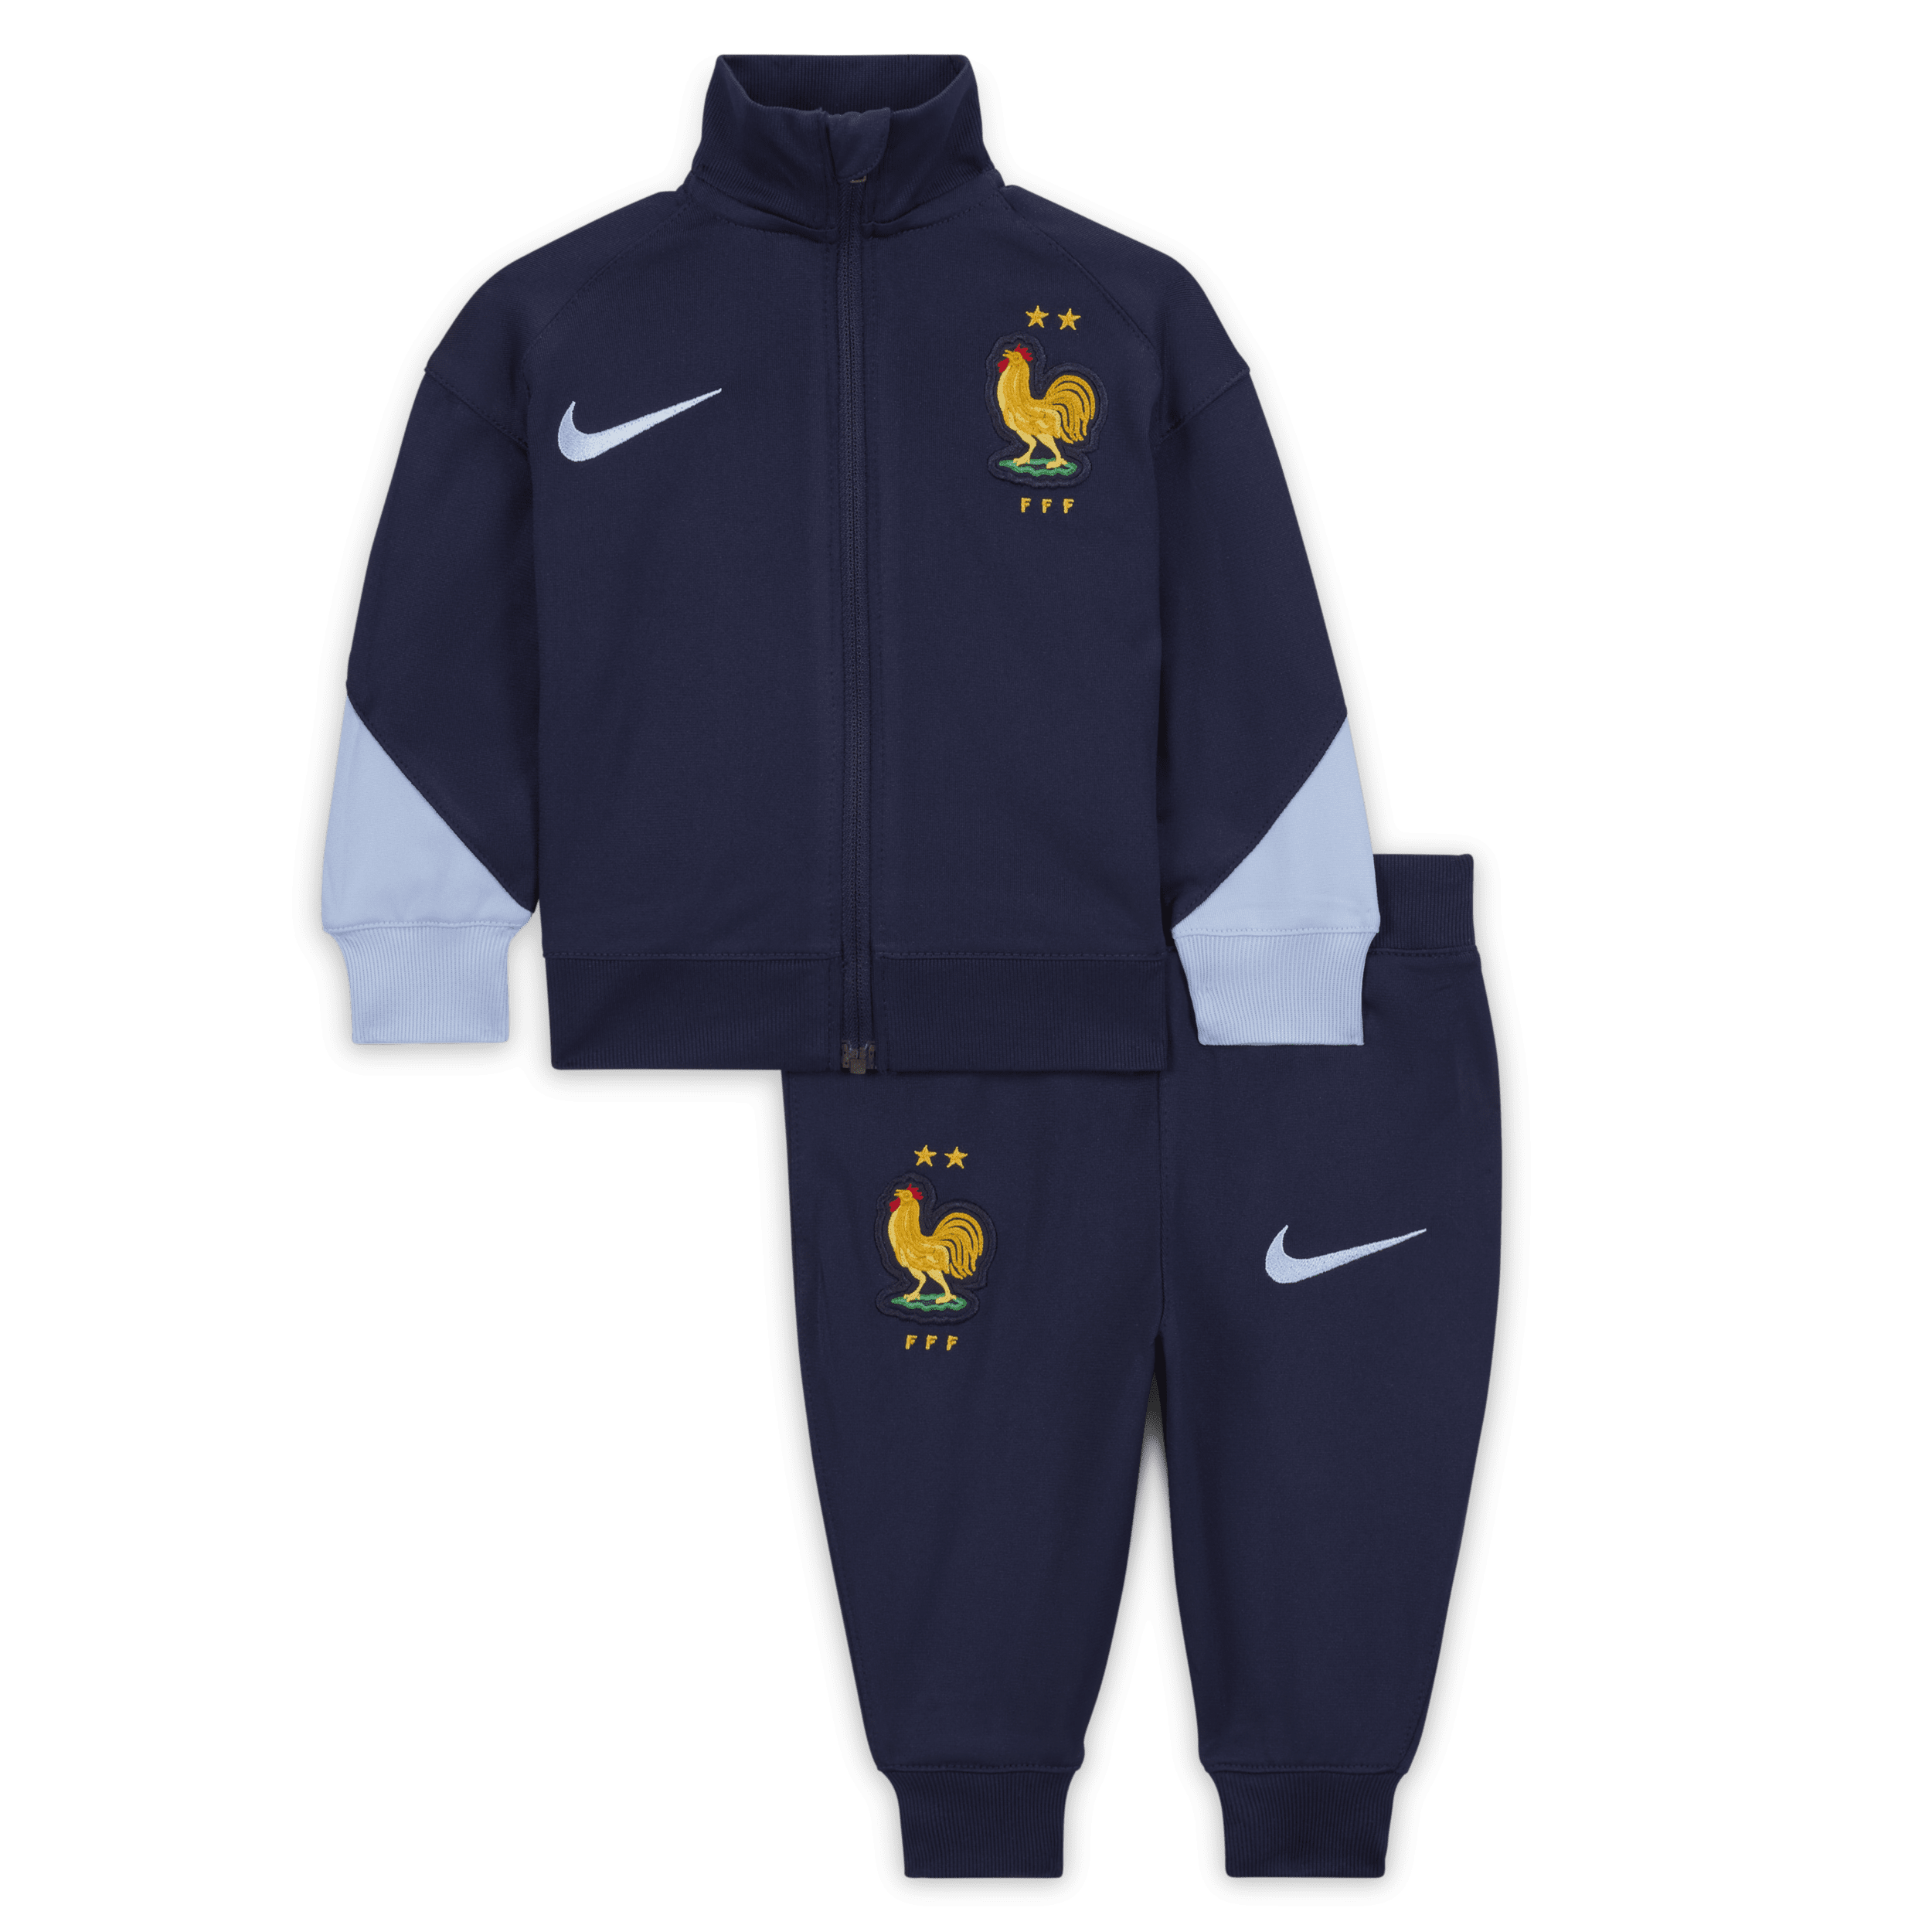 Nike FFF Strike Dri-FIT knit voetbaltrainingspak voor baby's Blauw